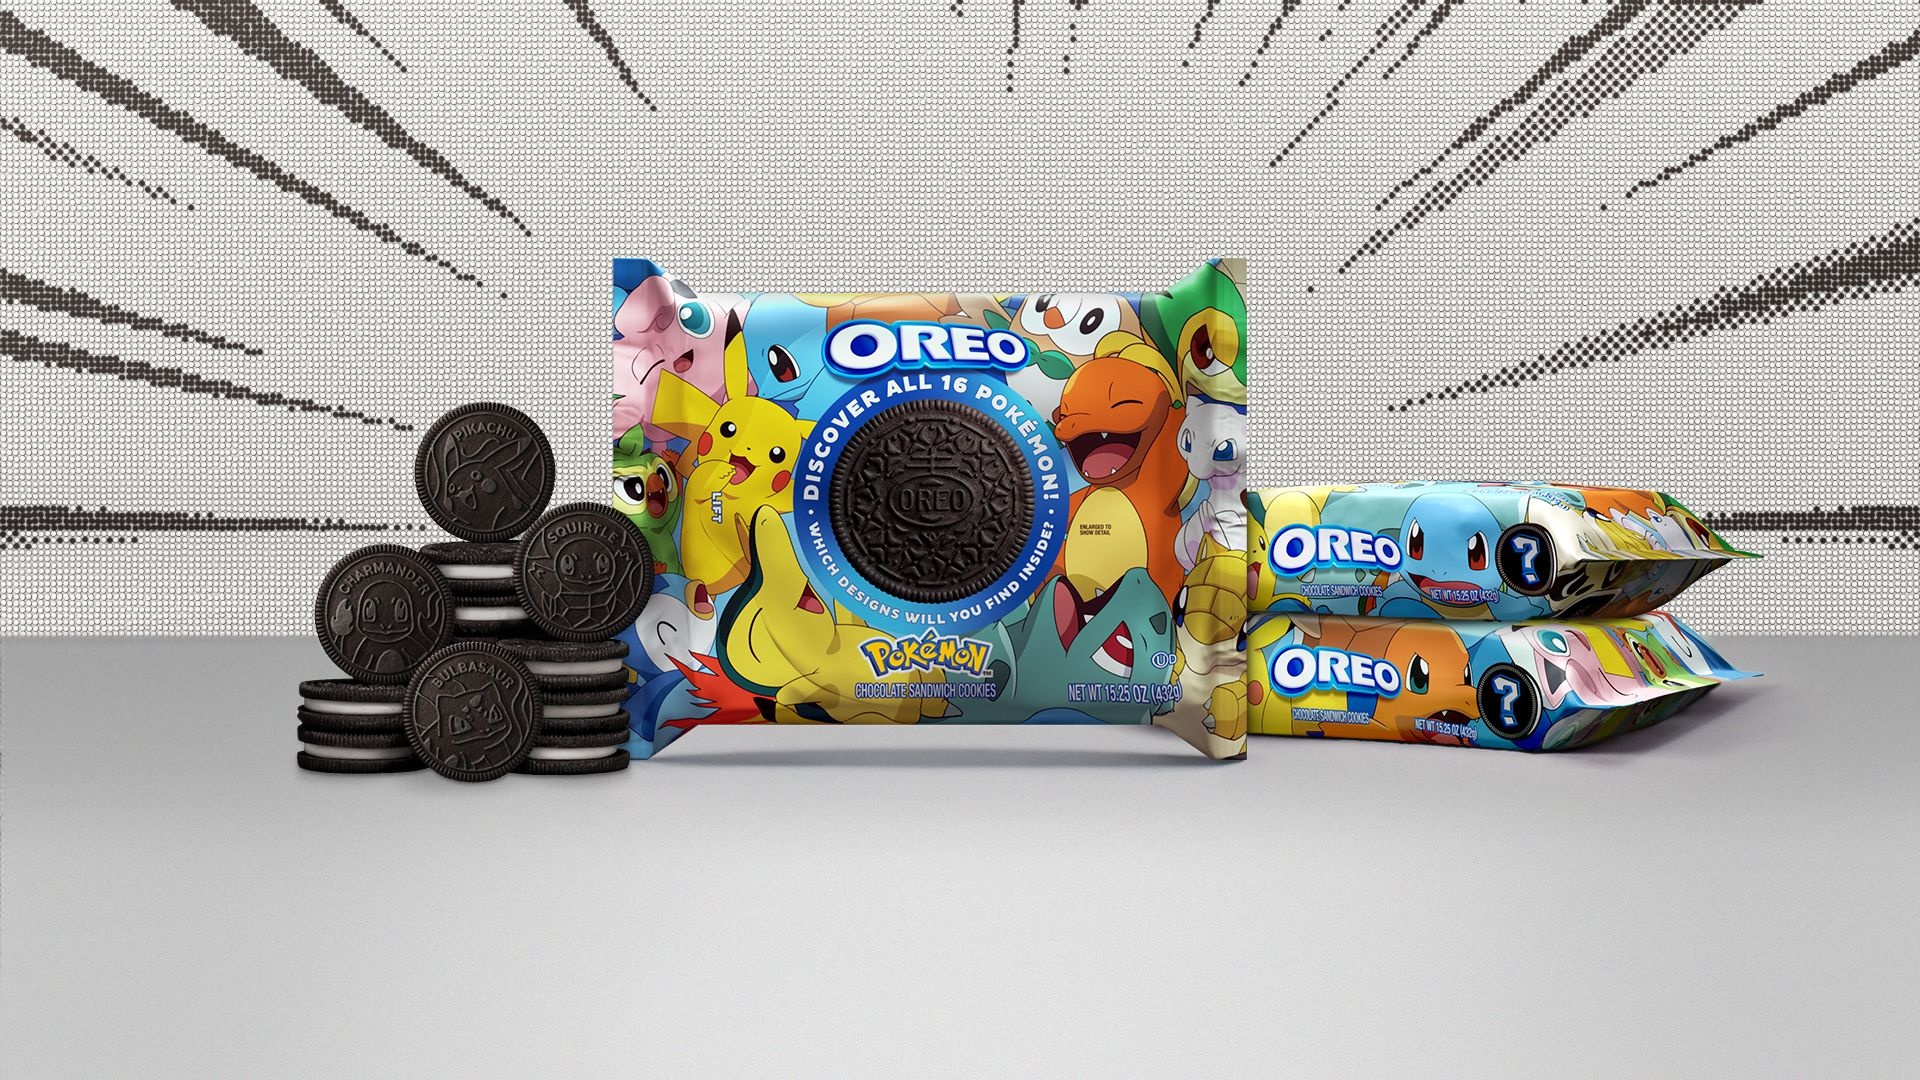 Oreo Cookies: A line of Pokemon cookies, Snack. 1920x1080 Full HD Wallpaper.